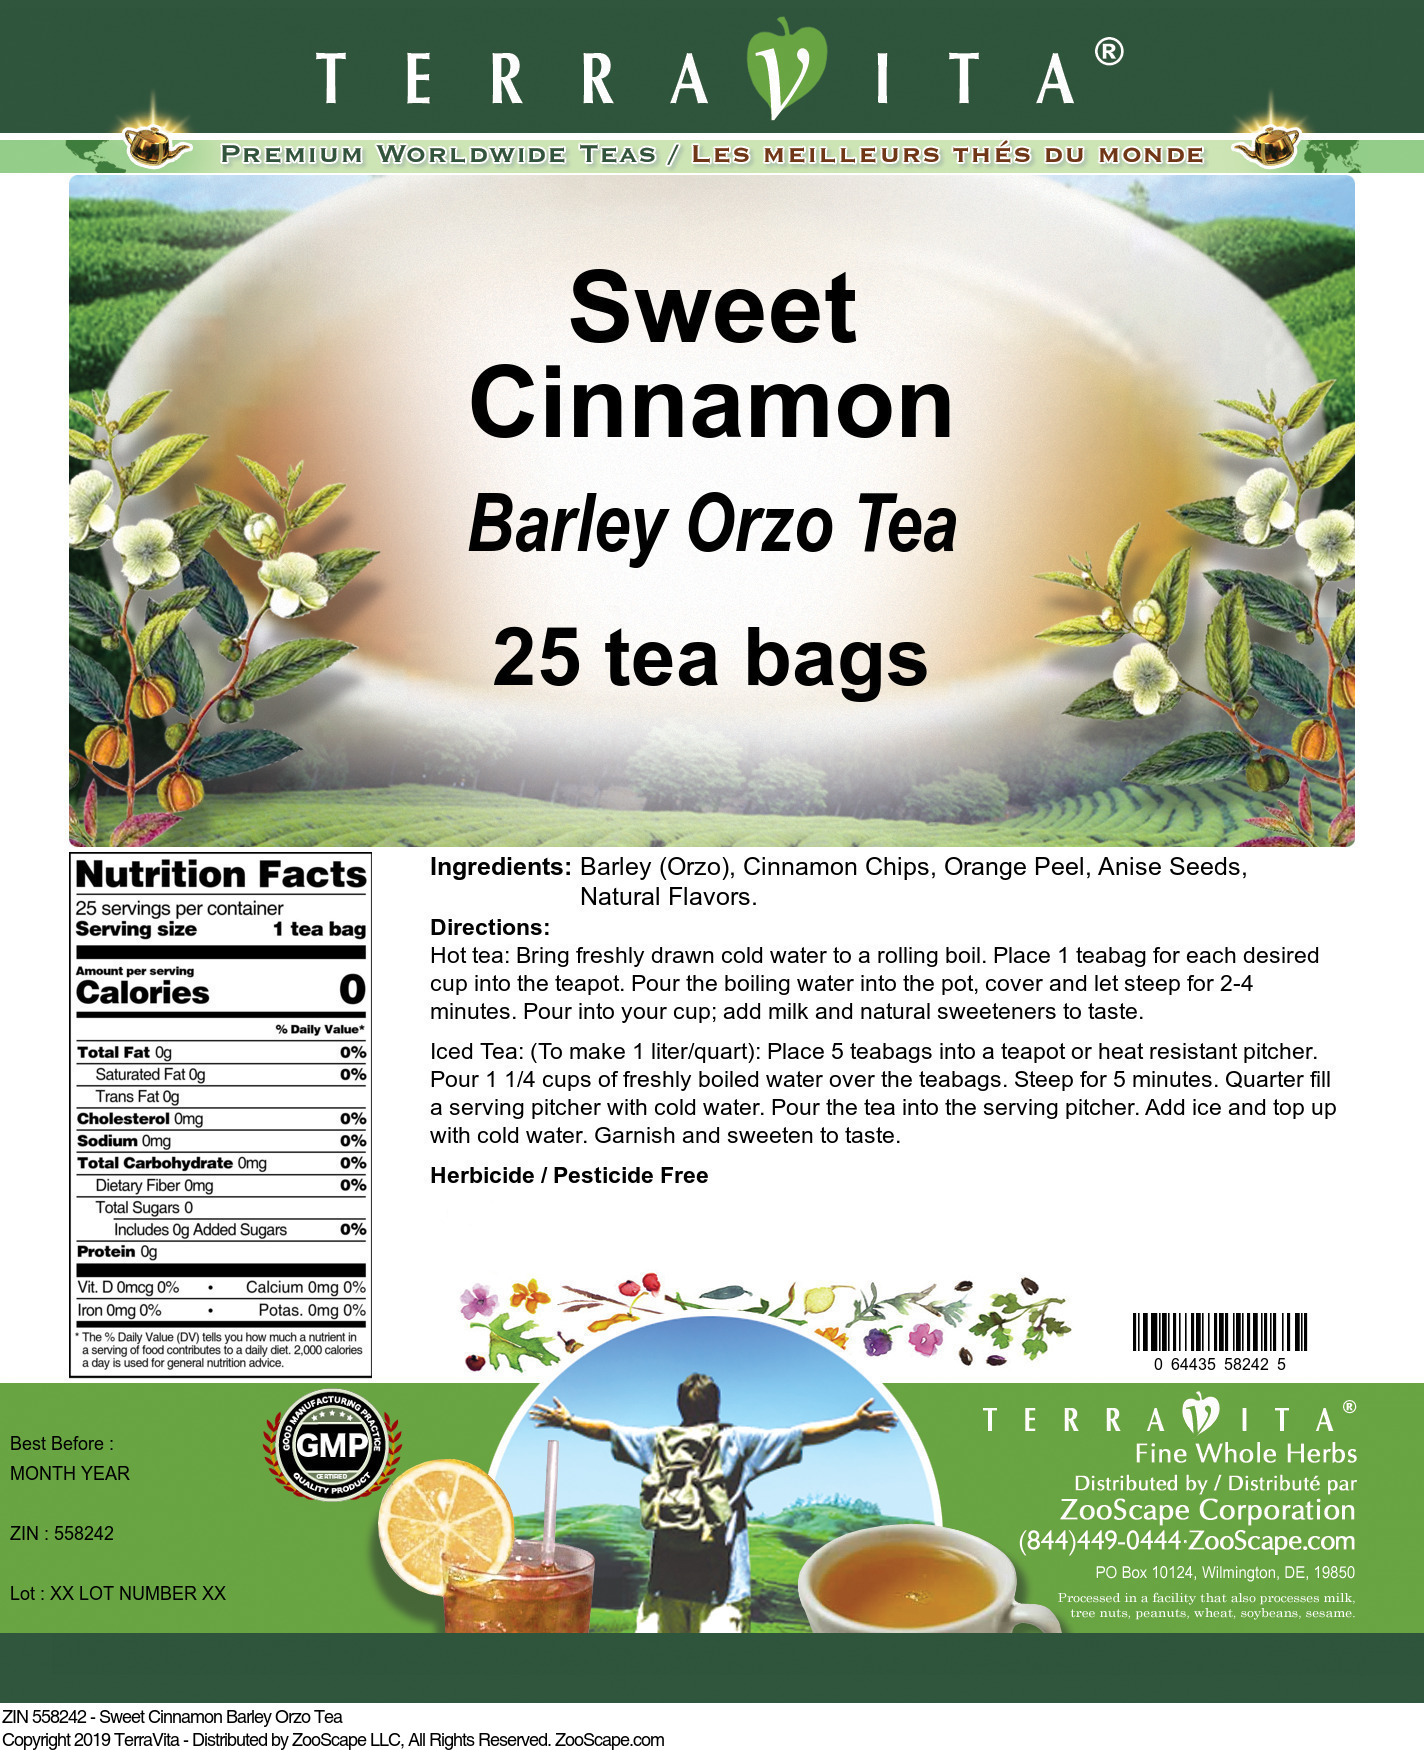 Sweet Cinnamon Barley Orzo Tea - Label